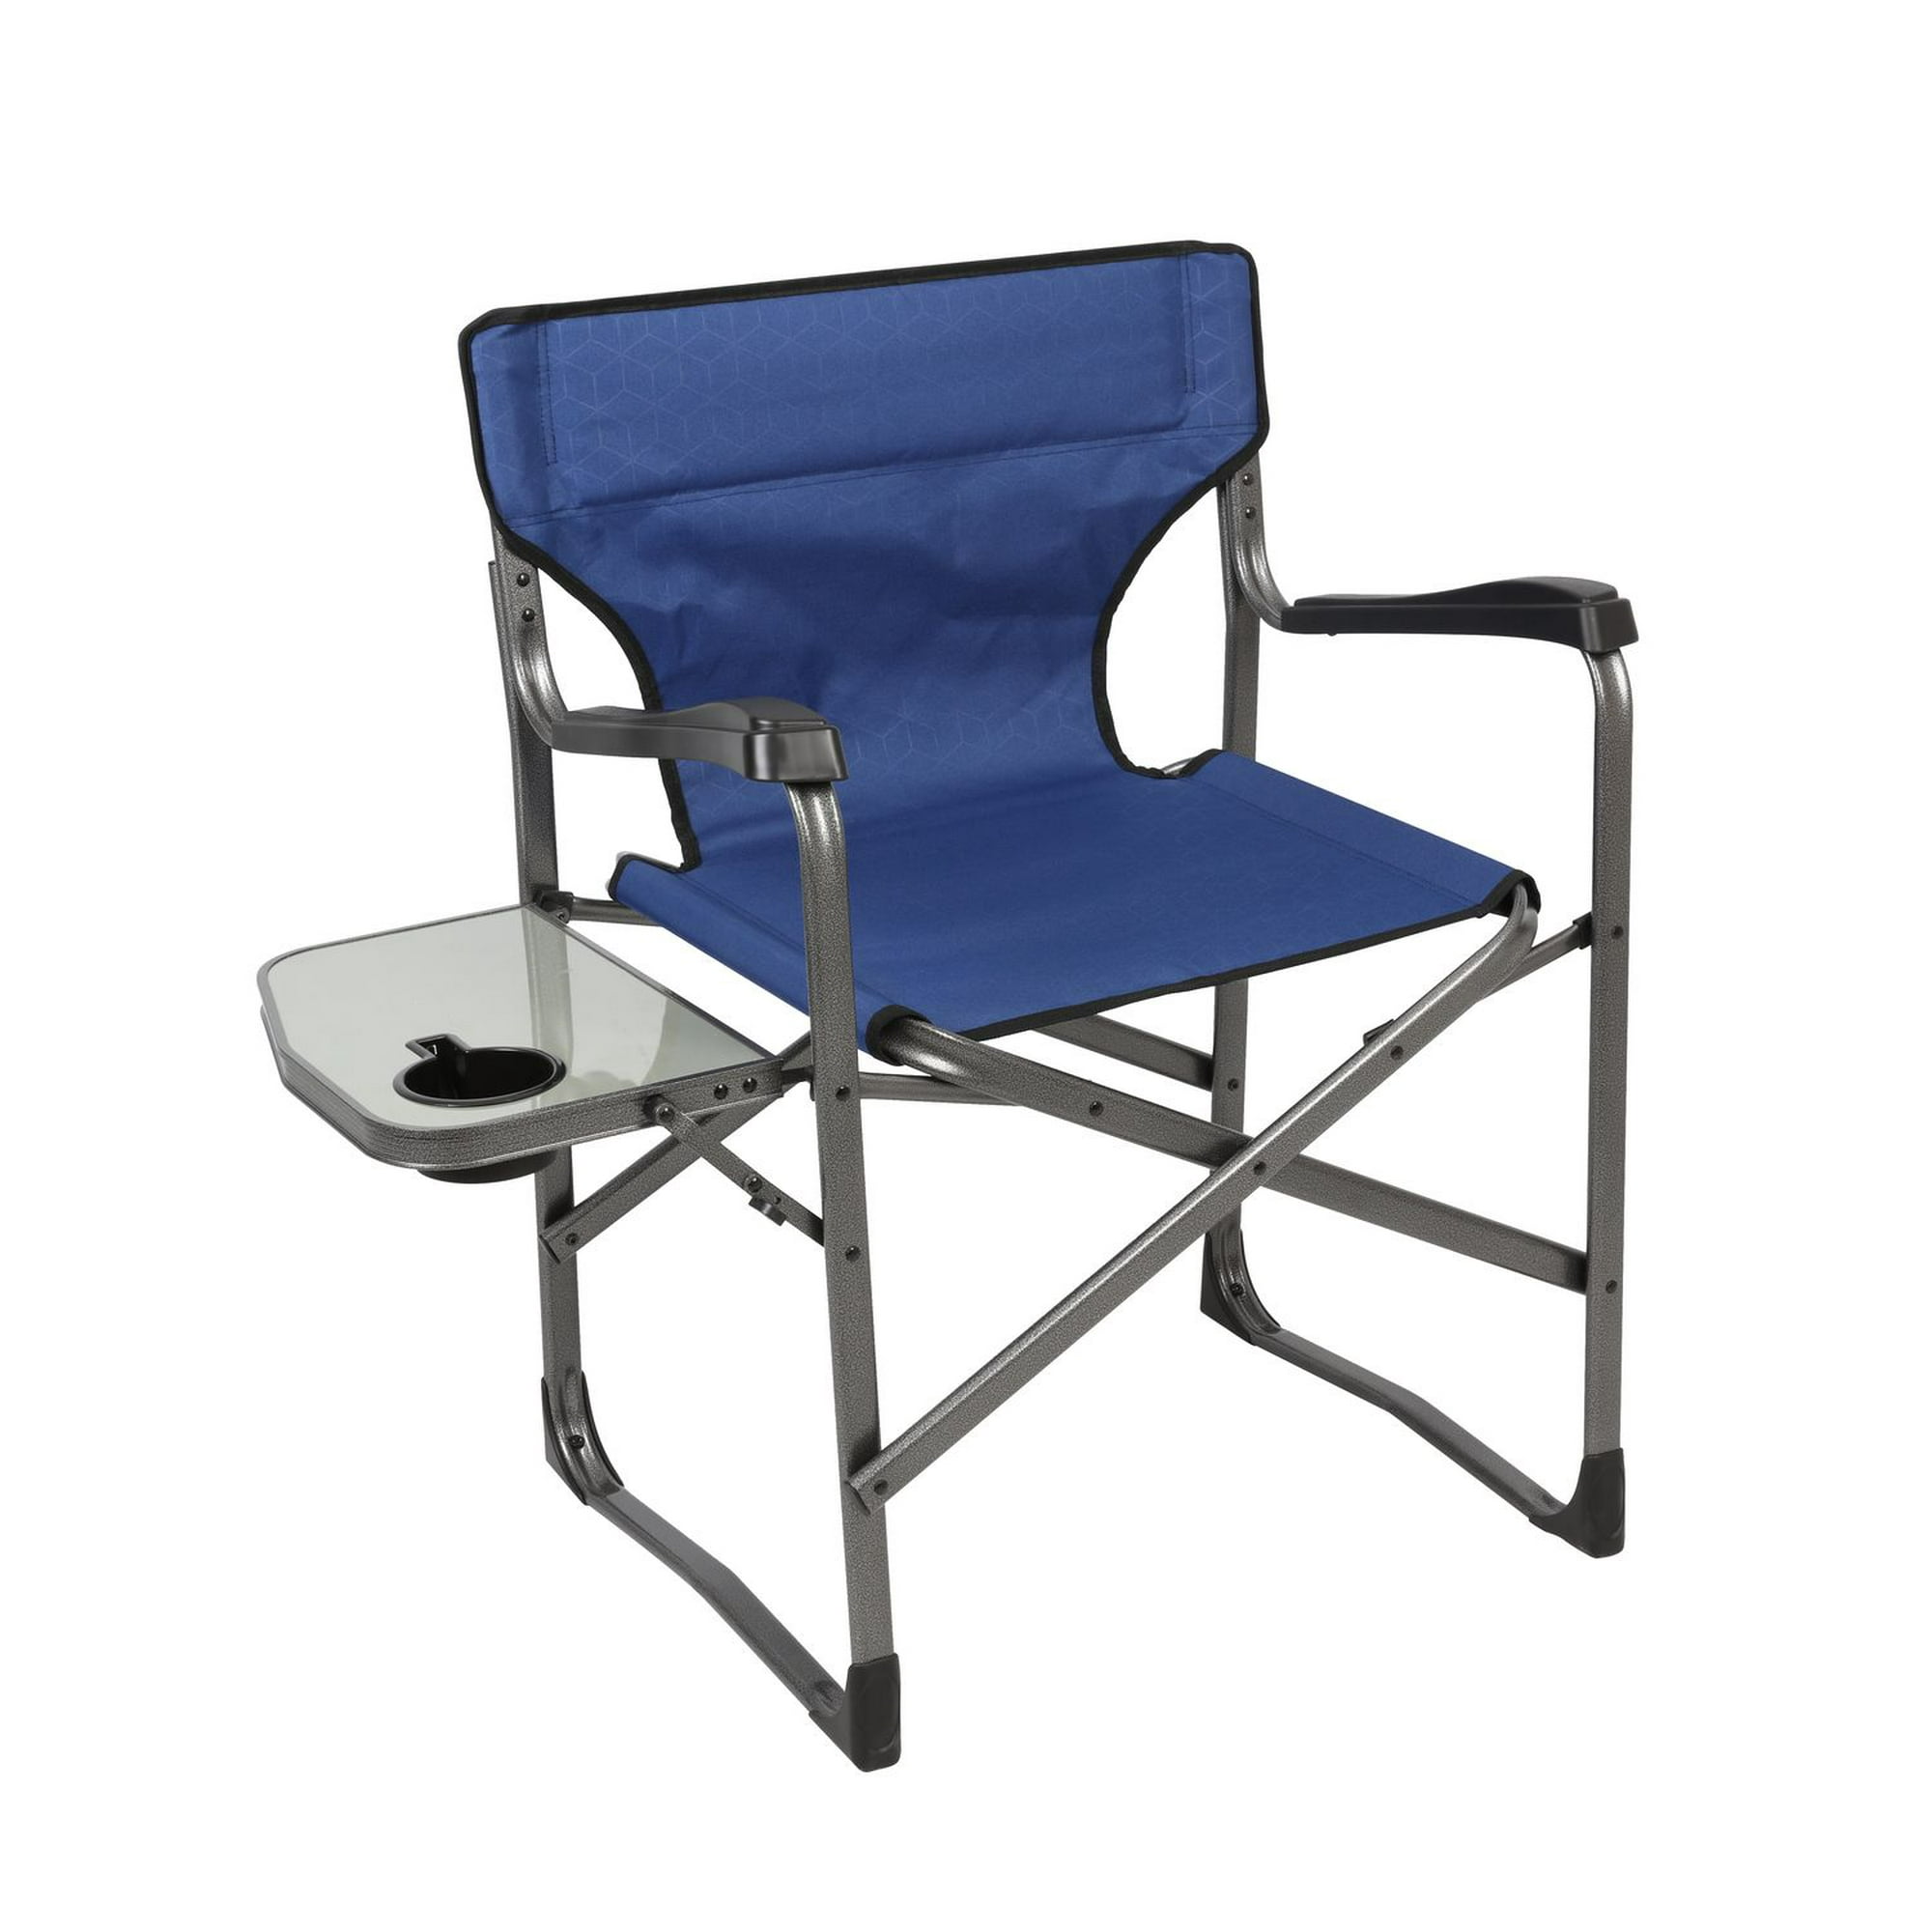 ZJIEX Folding Directors Chair Camping Chair Portable Fishing Chair